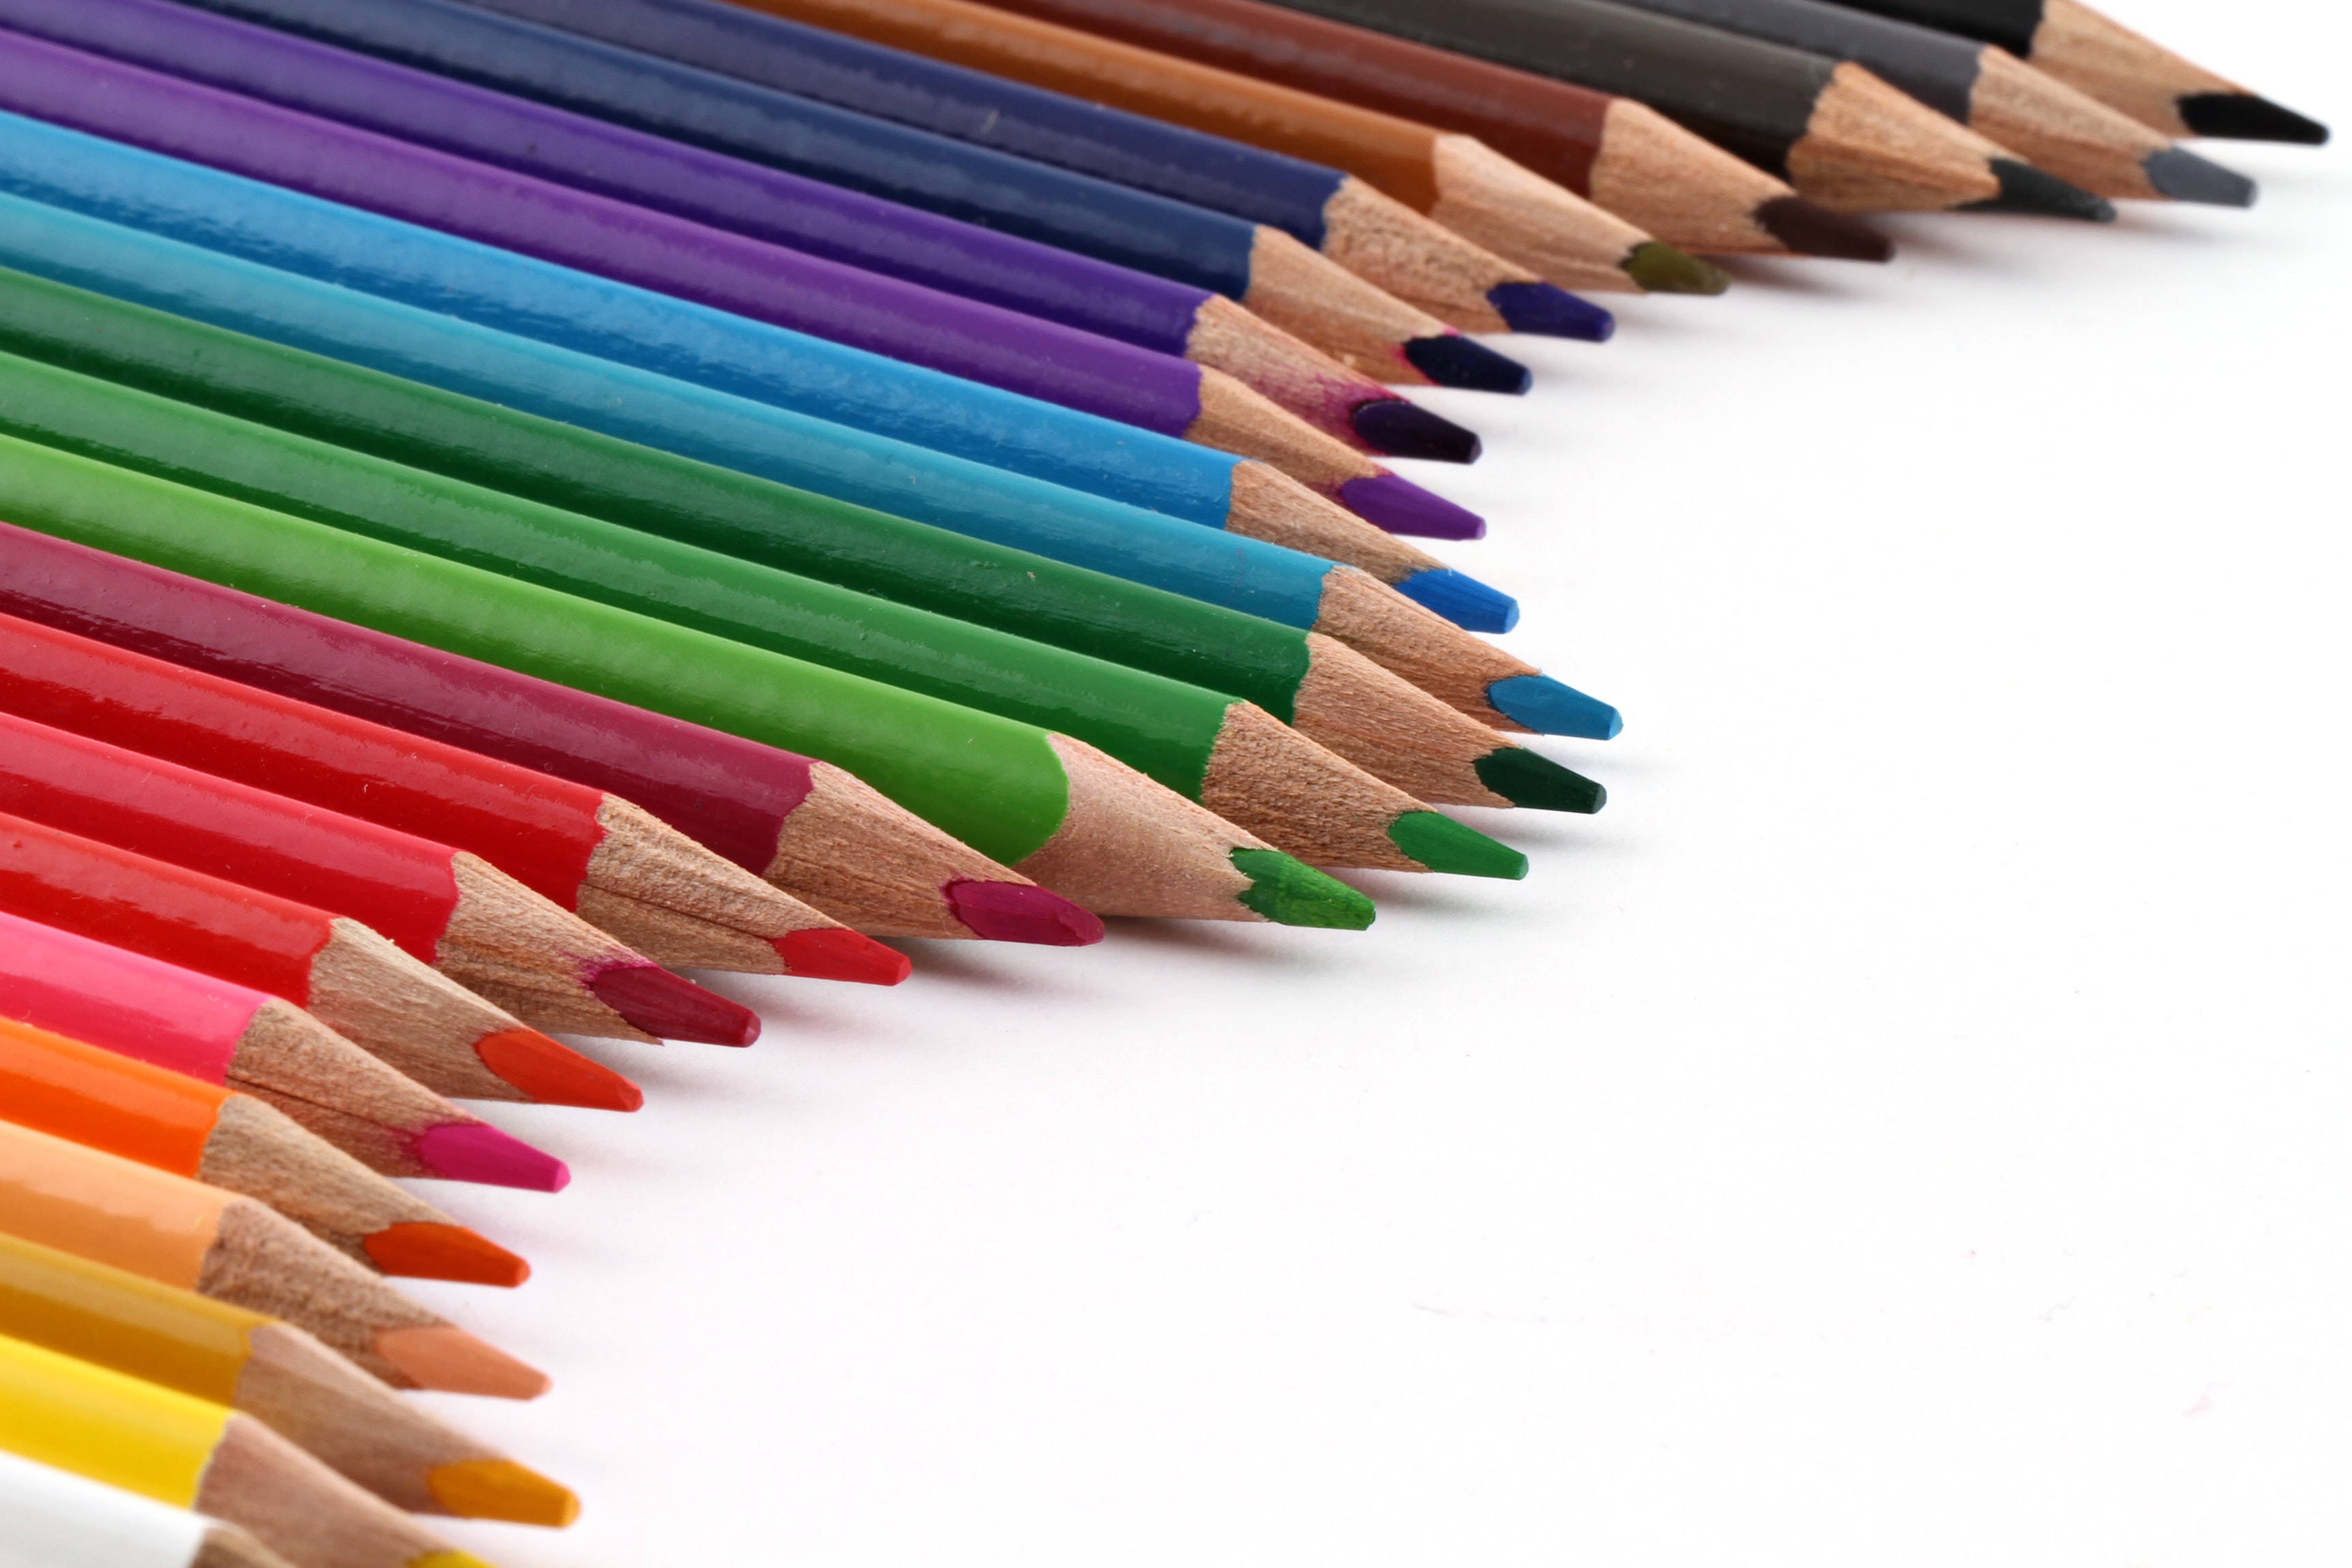 Pencil windows. Карандаши цветные. Цветные карандаши на белом фоне. Красивые карандаши. Яркие цветные карандаши.